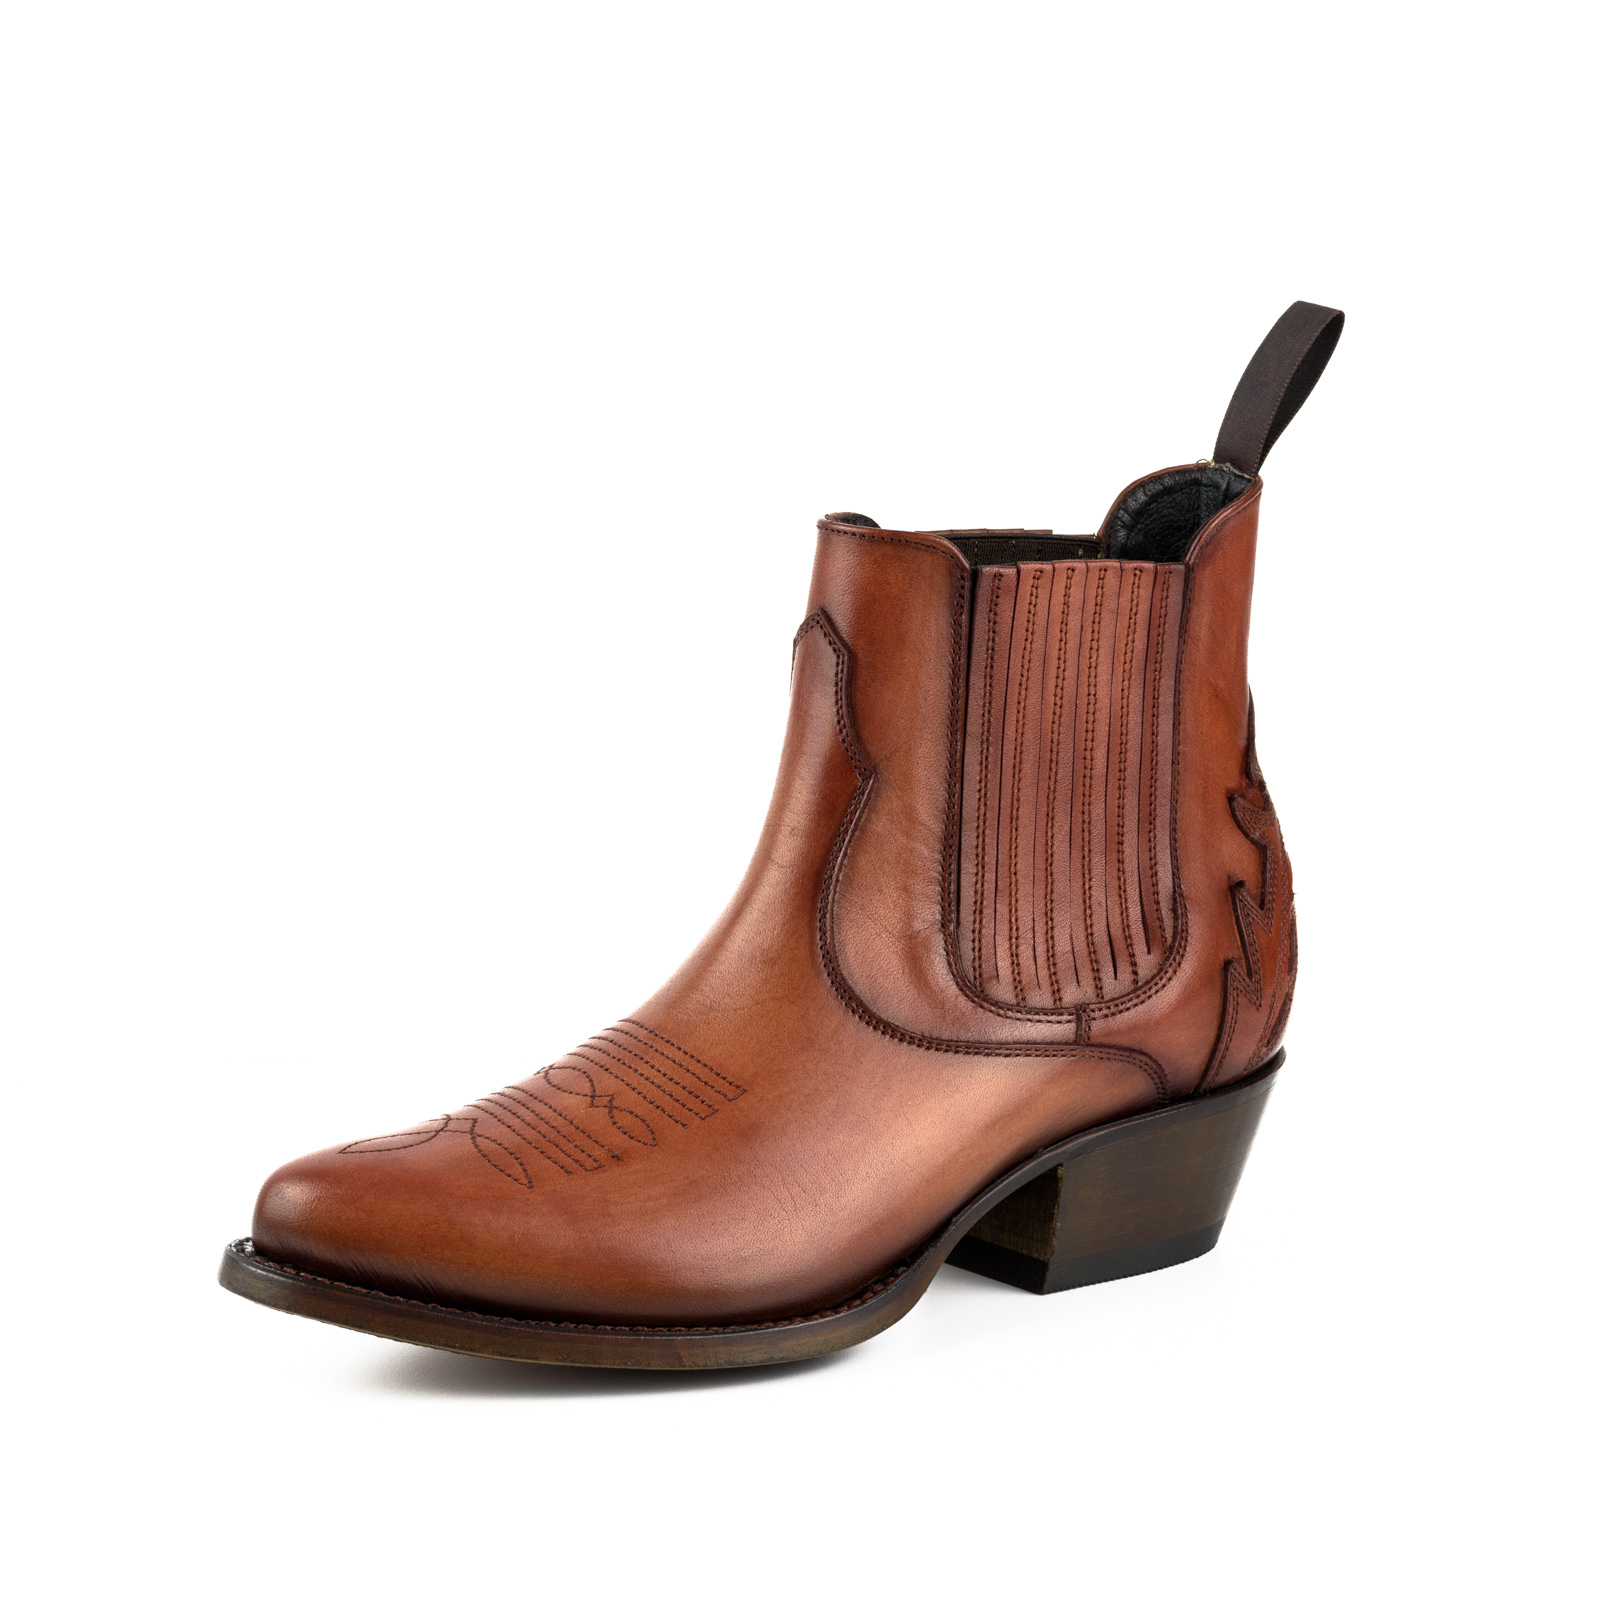 mayura-boots-modelo-marilyn-2487-cognac-1